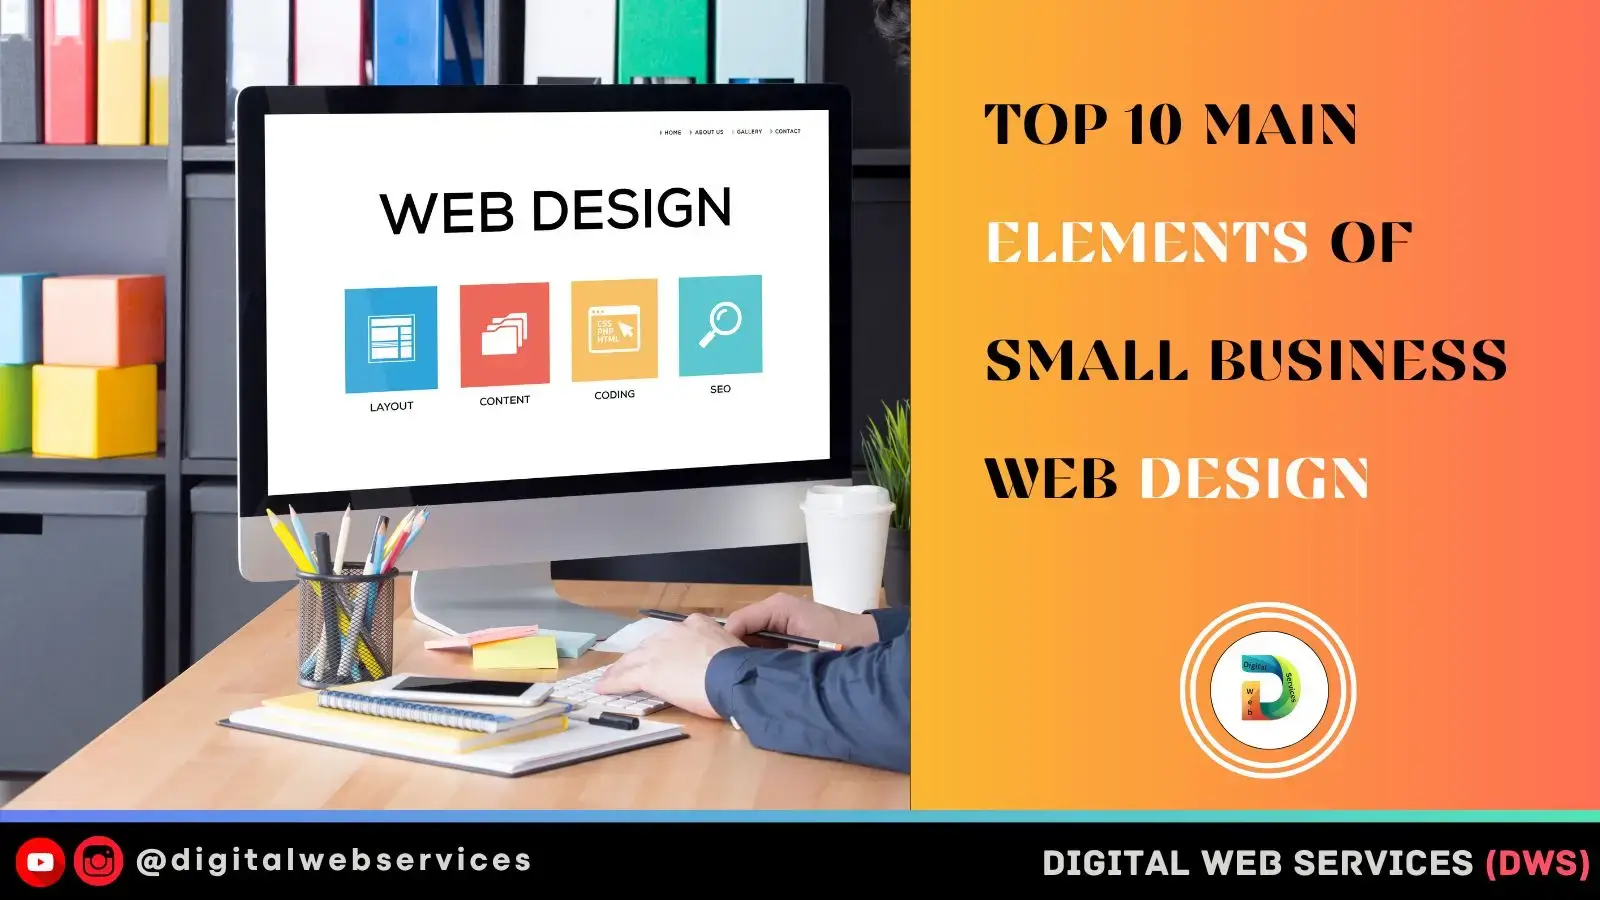 SMALL BUSINESS WEB DESIGN